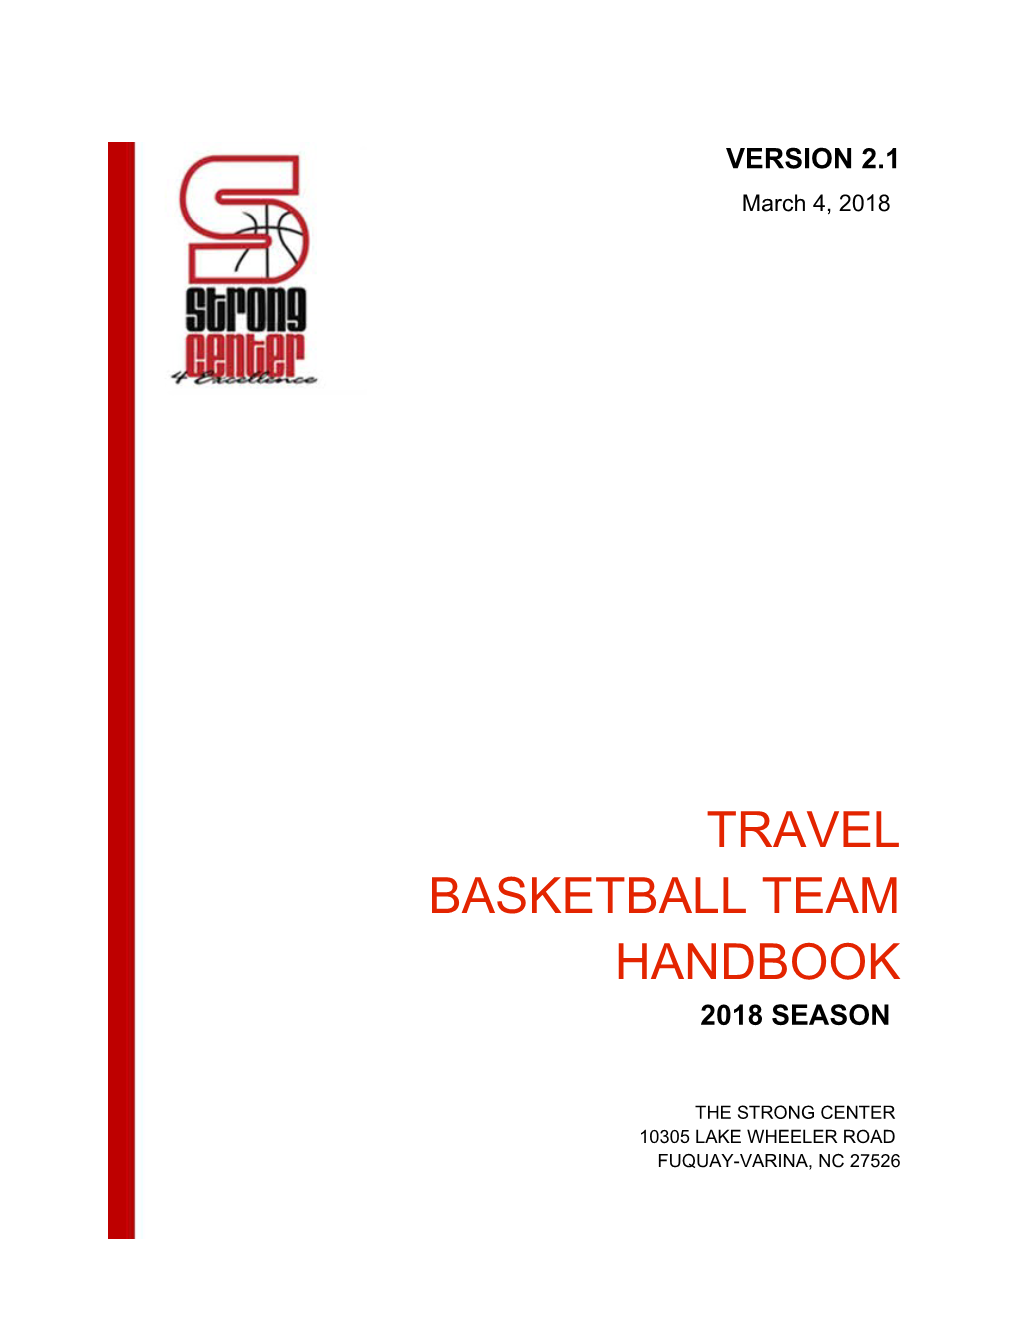 Travel Basketball Team Handbook